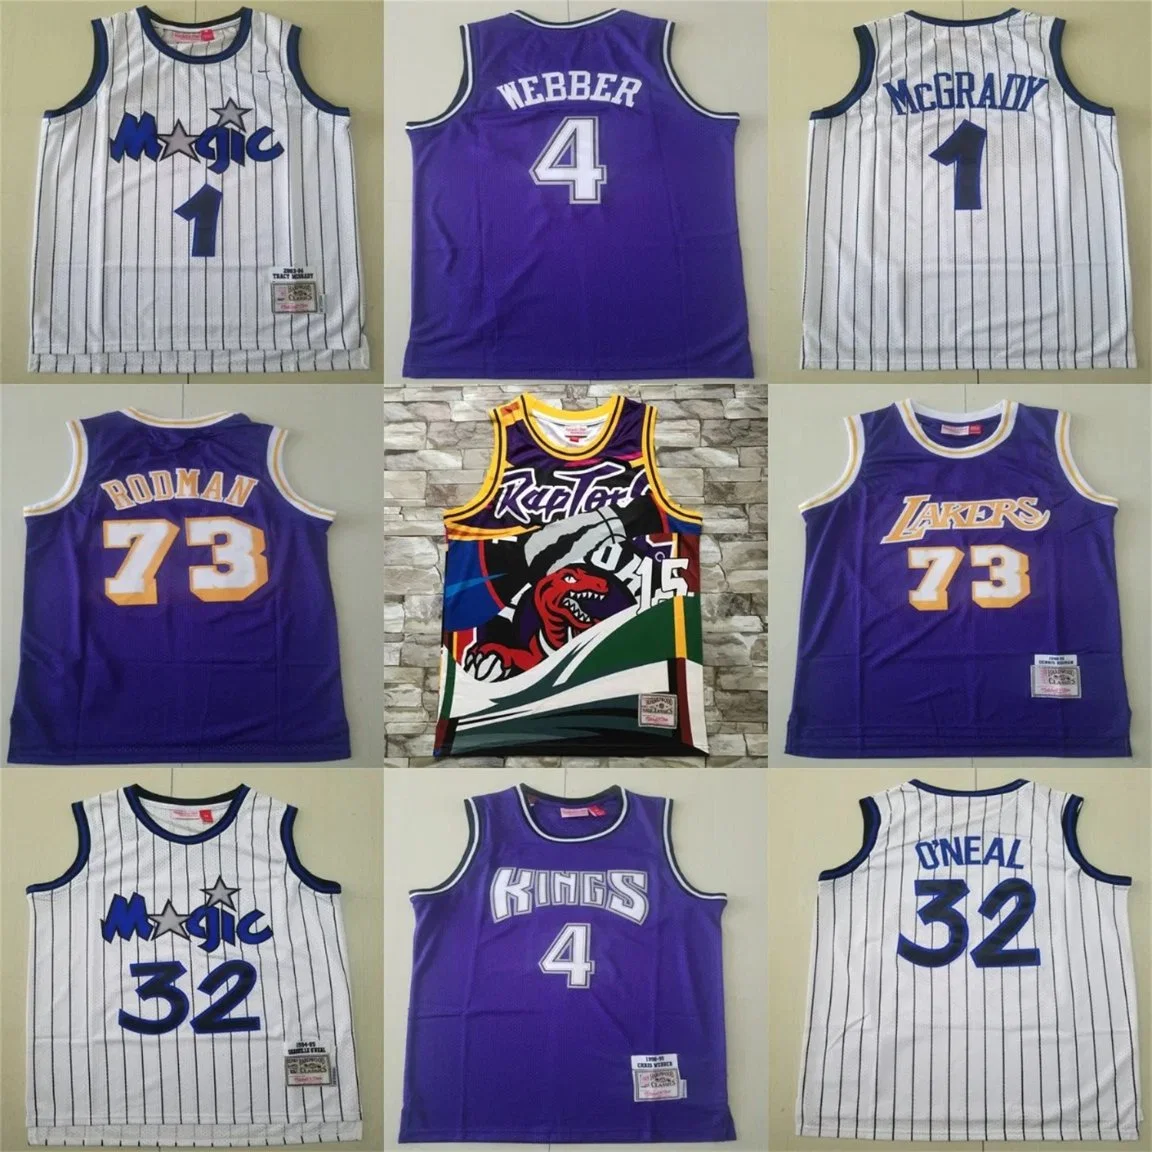 Mens Custom Basketball Jerseys Magic Mcgrady 1 Lakers Rodman 73 Raptors 15 Kings 4 Vintage Sportswear